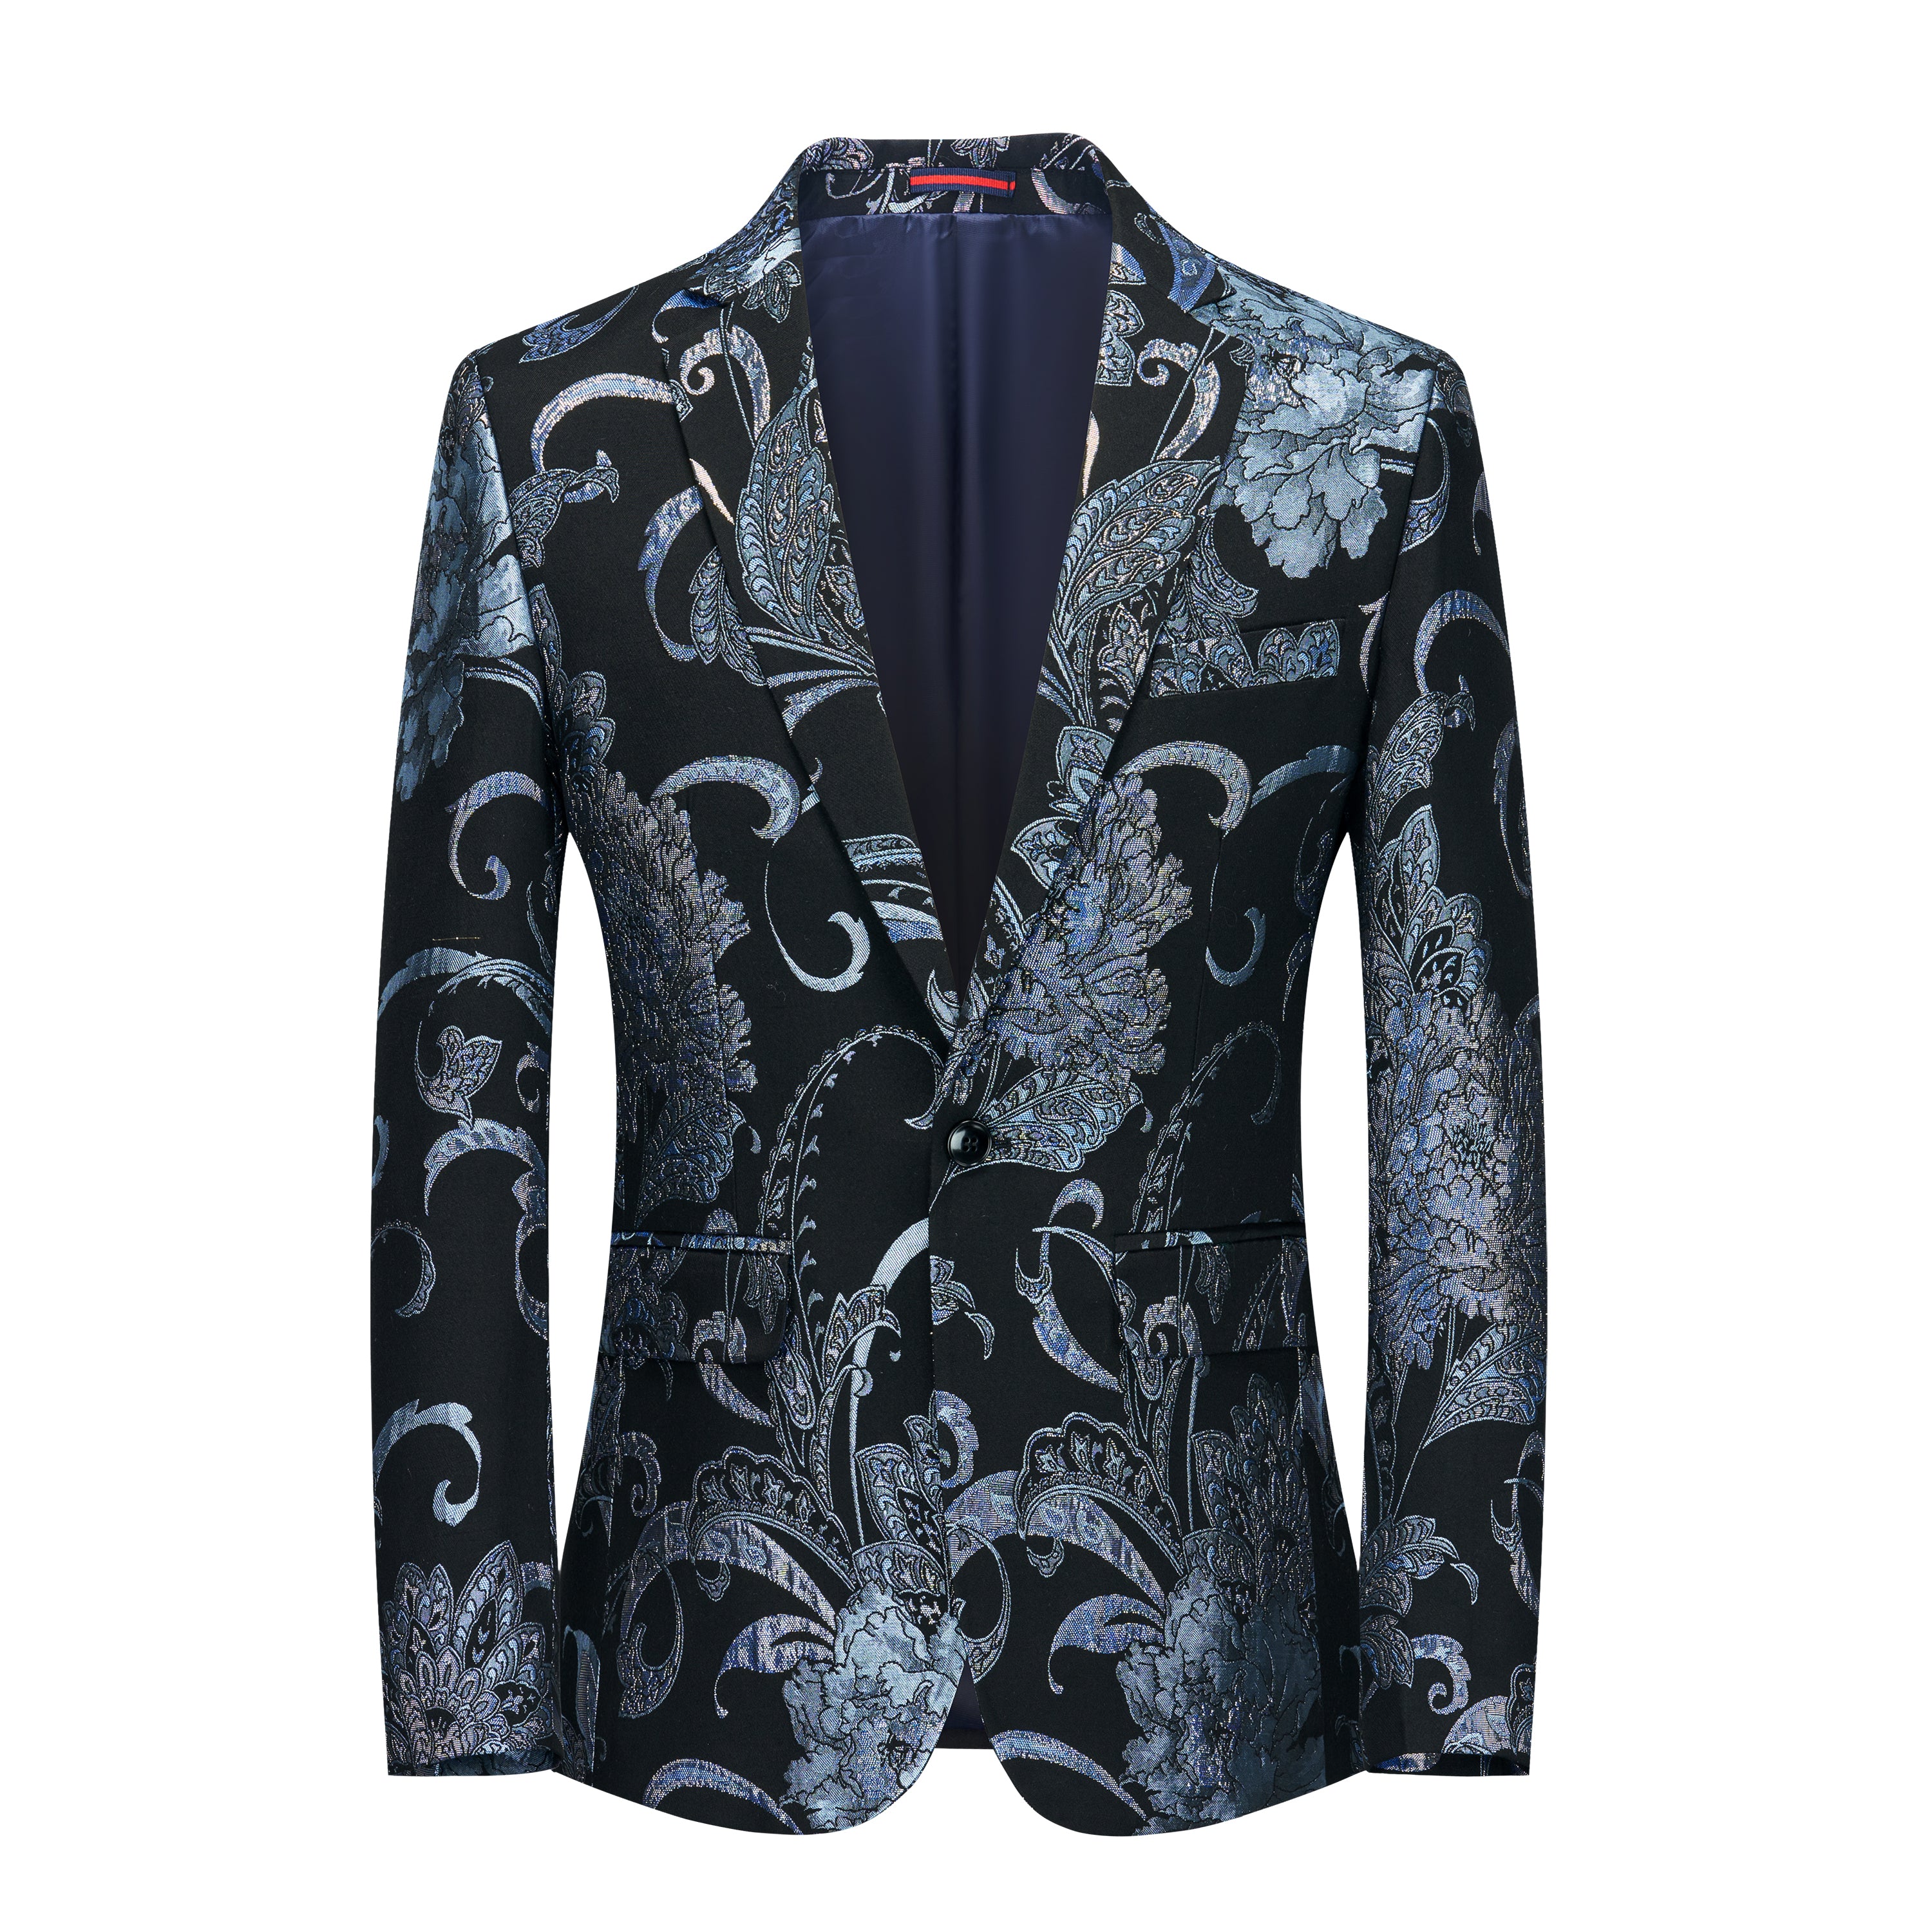 Men's Blazer Casual One Button Suit Jacket Leisure Floral Printed Sport Coat